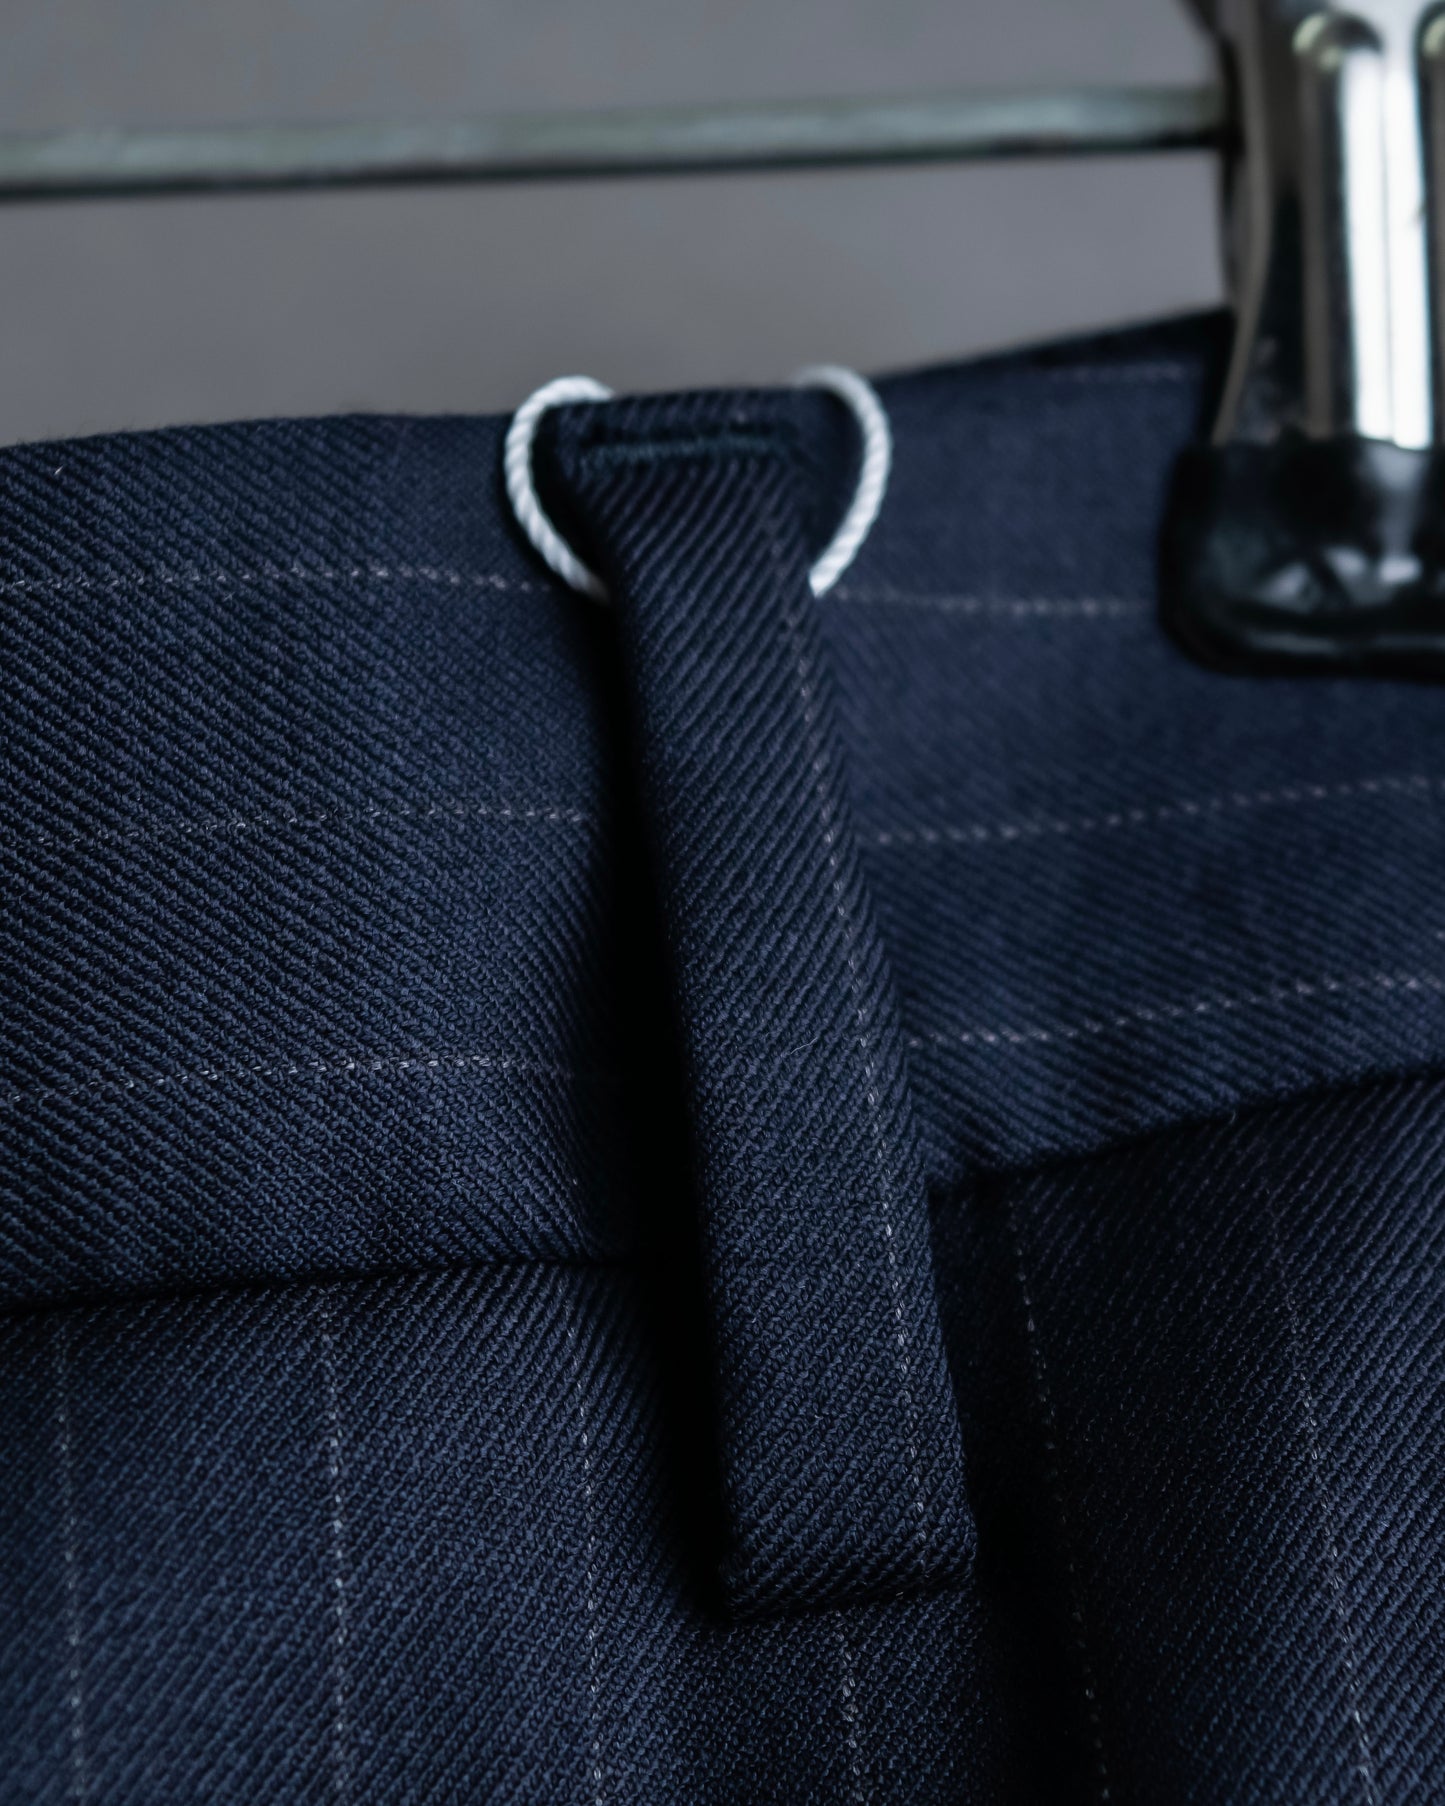 “Maison Margiela 2011AW” pinstripe pattern straight trouser